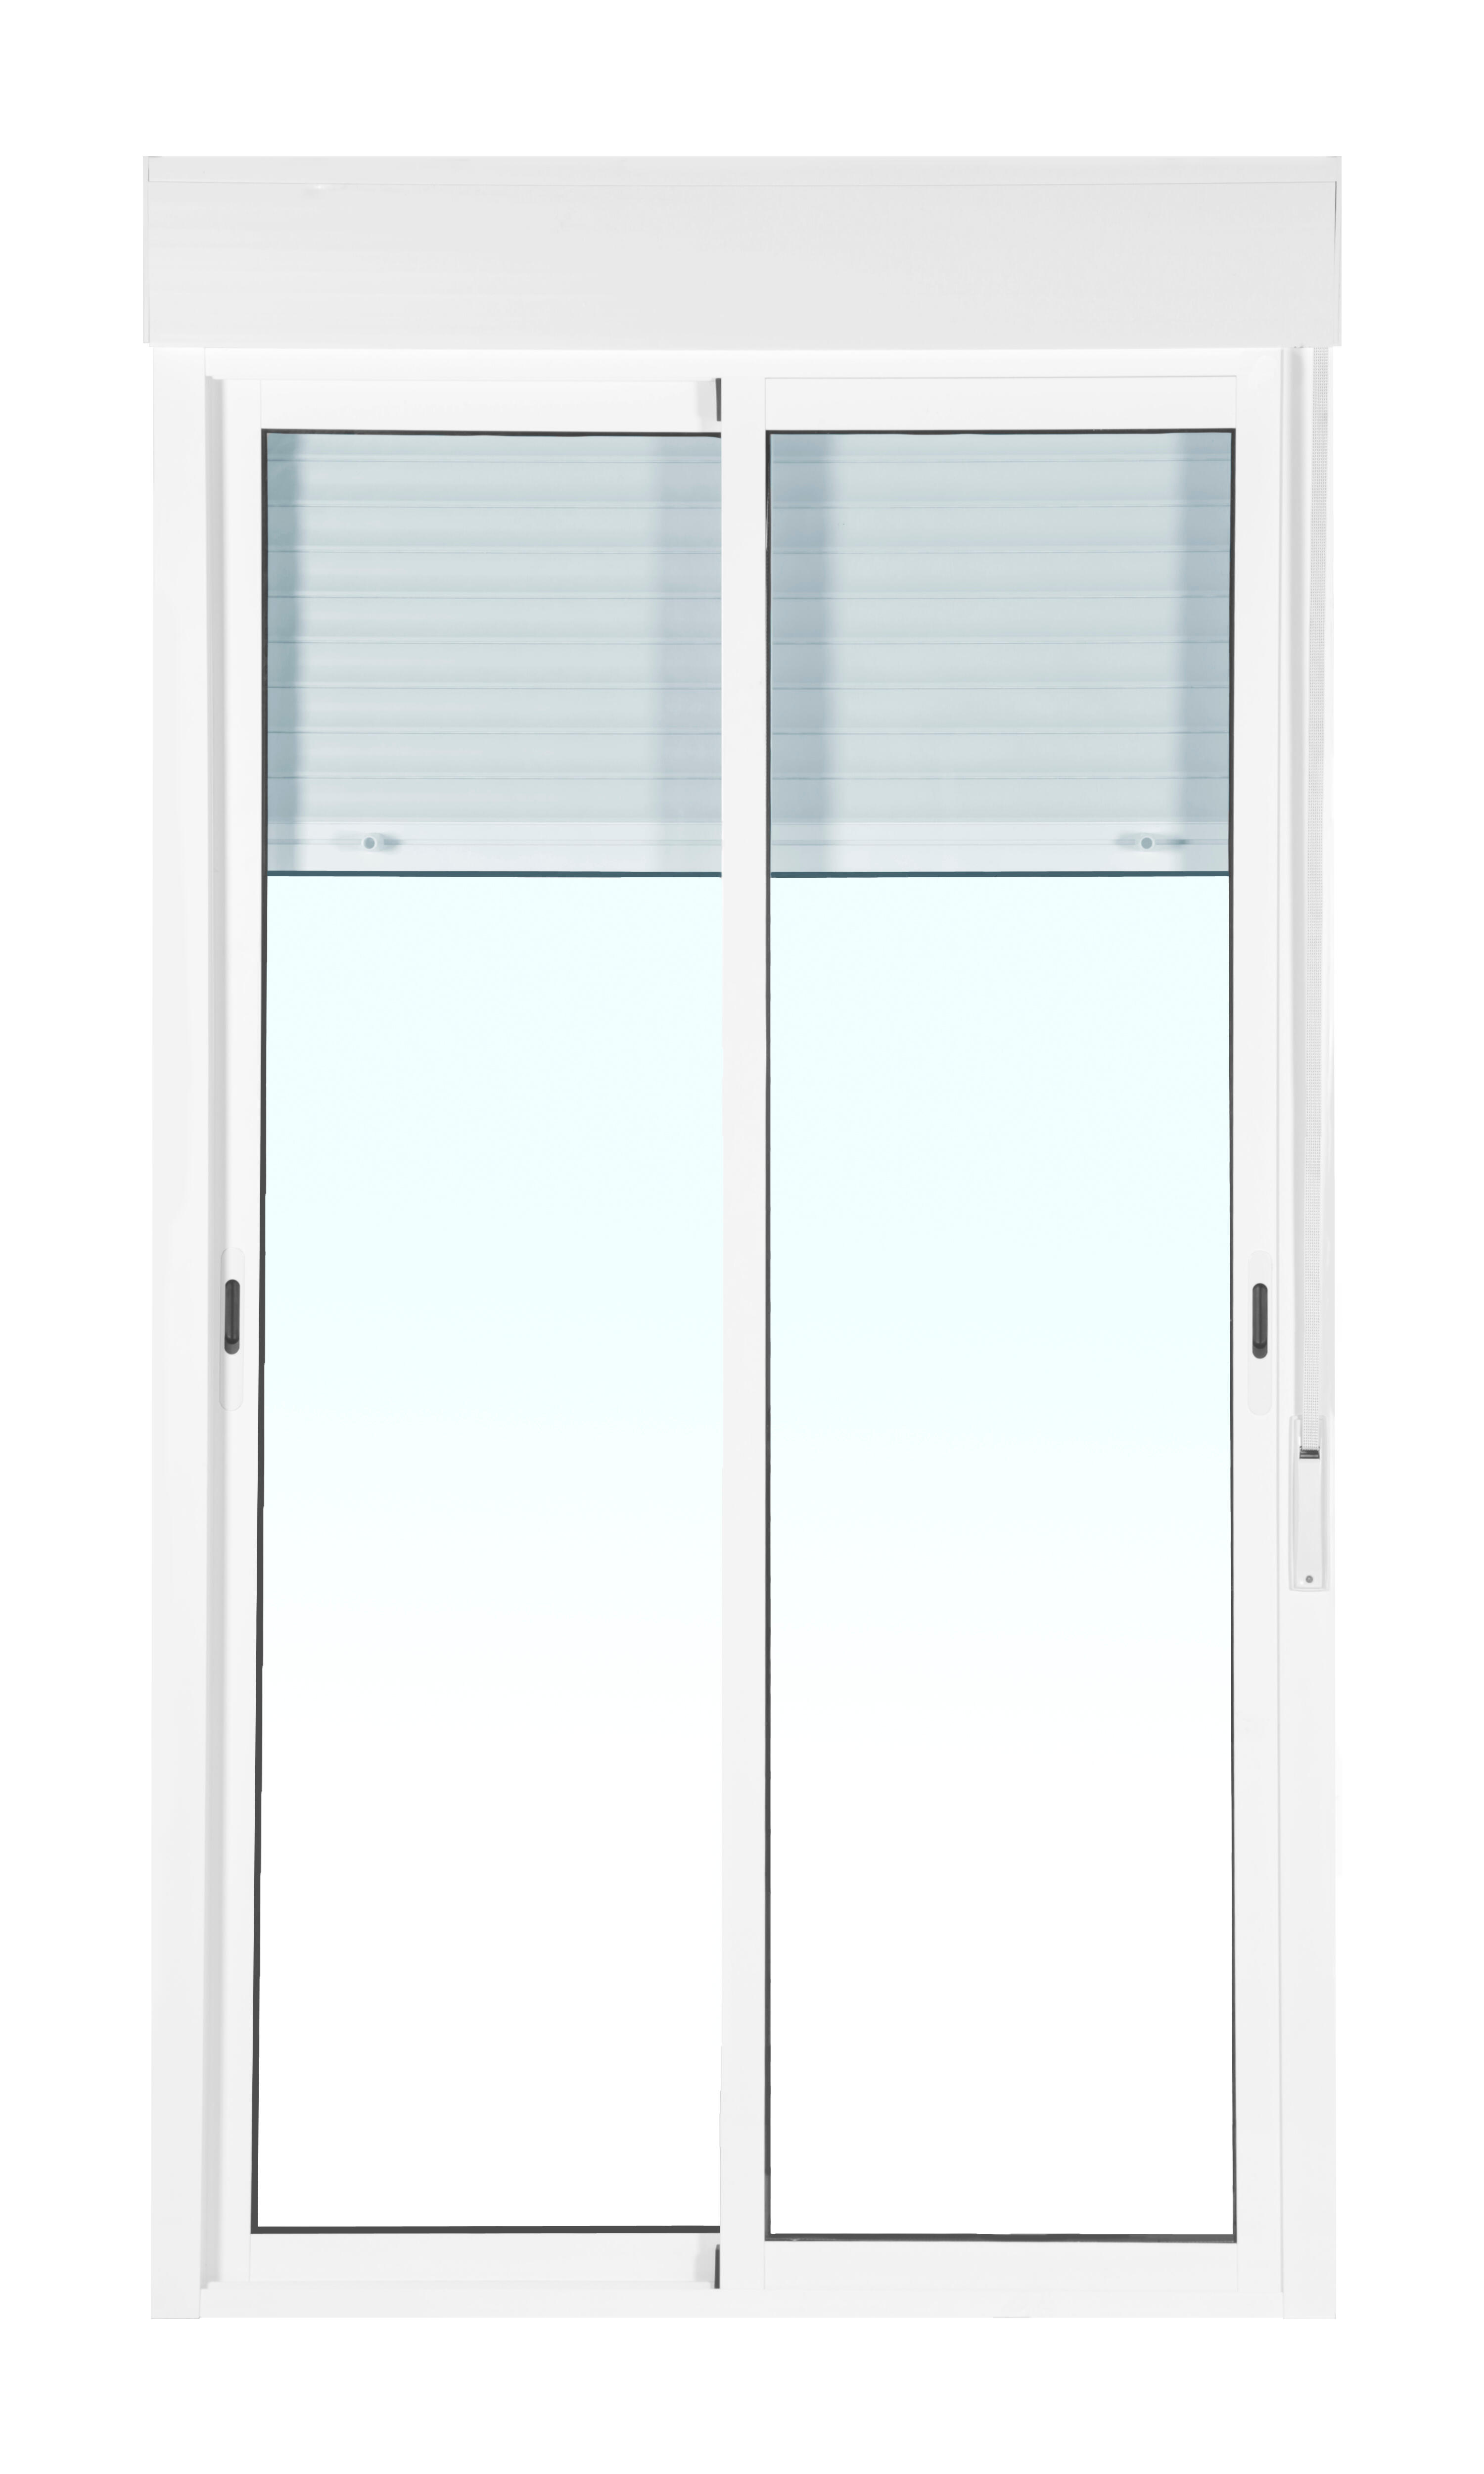 Balconera aluminio artens blanca corredera con persiana de 120x229 cm